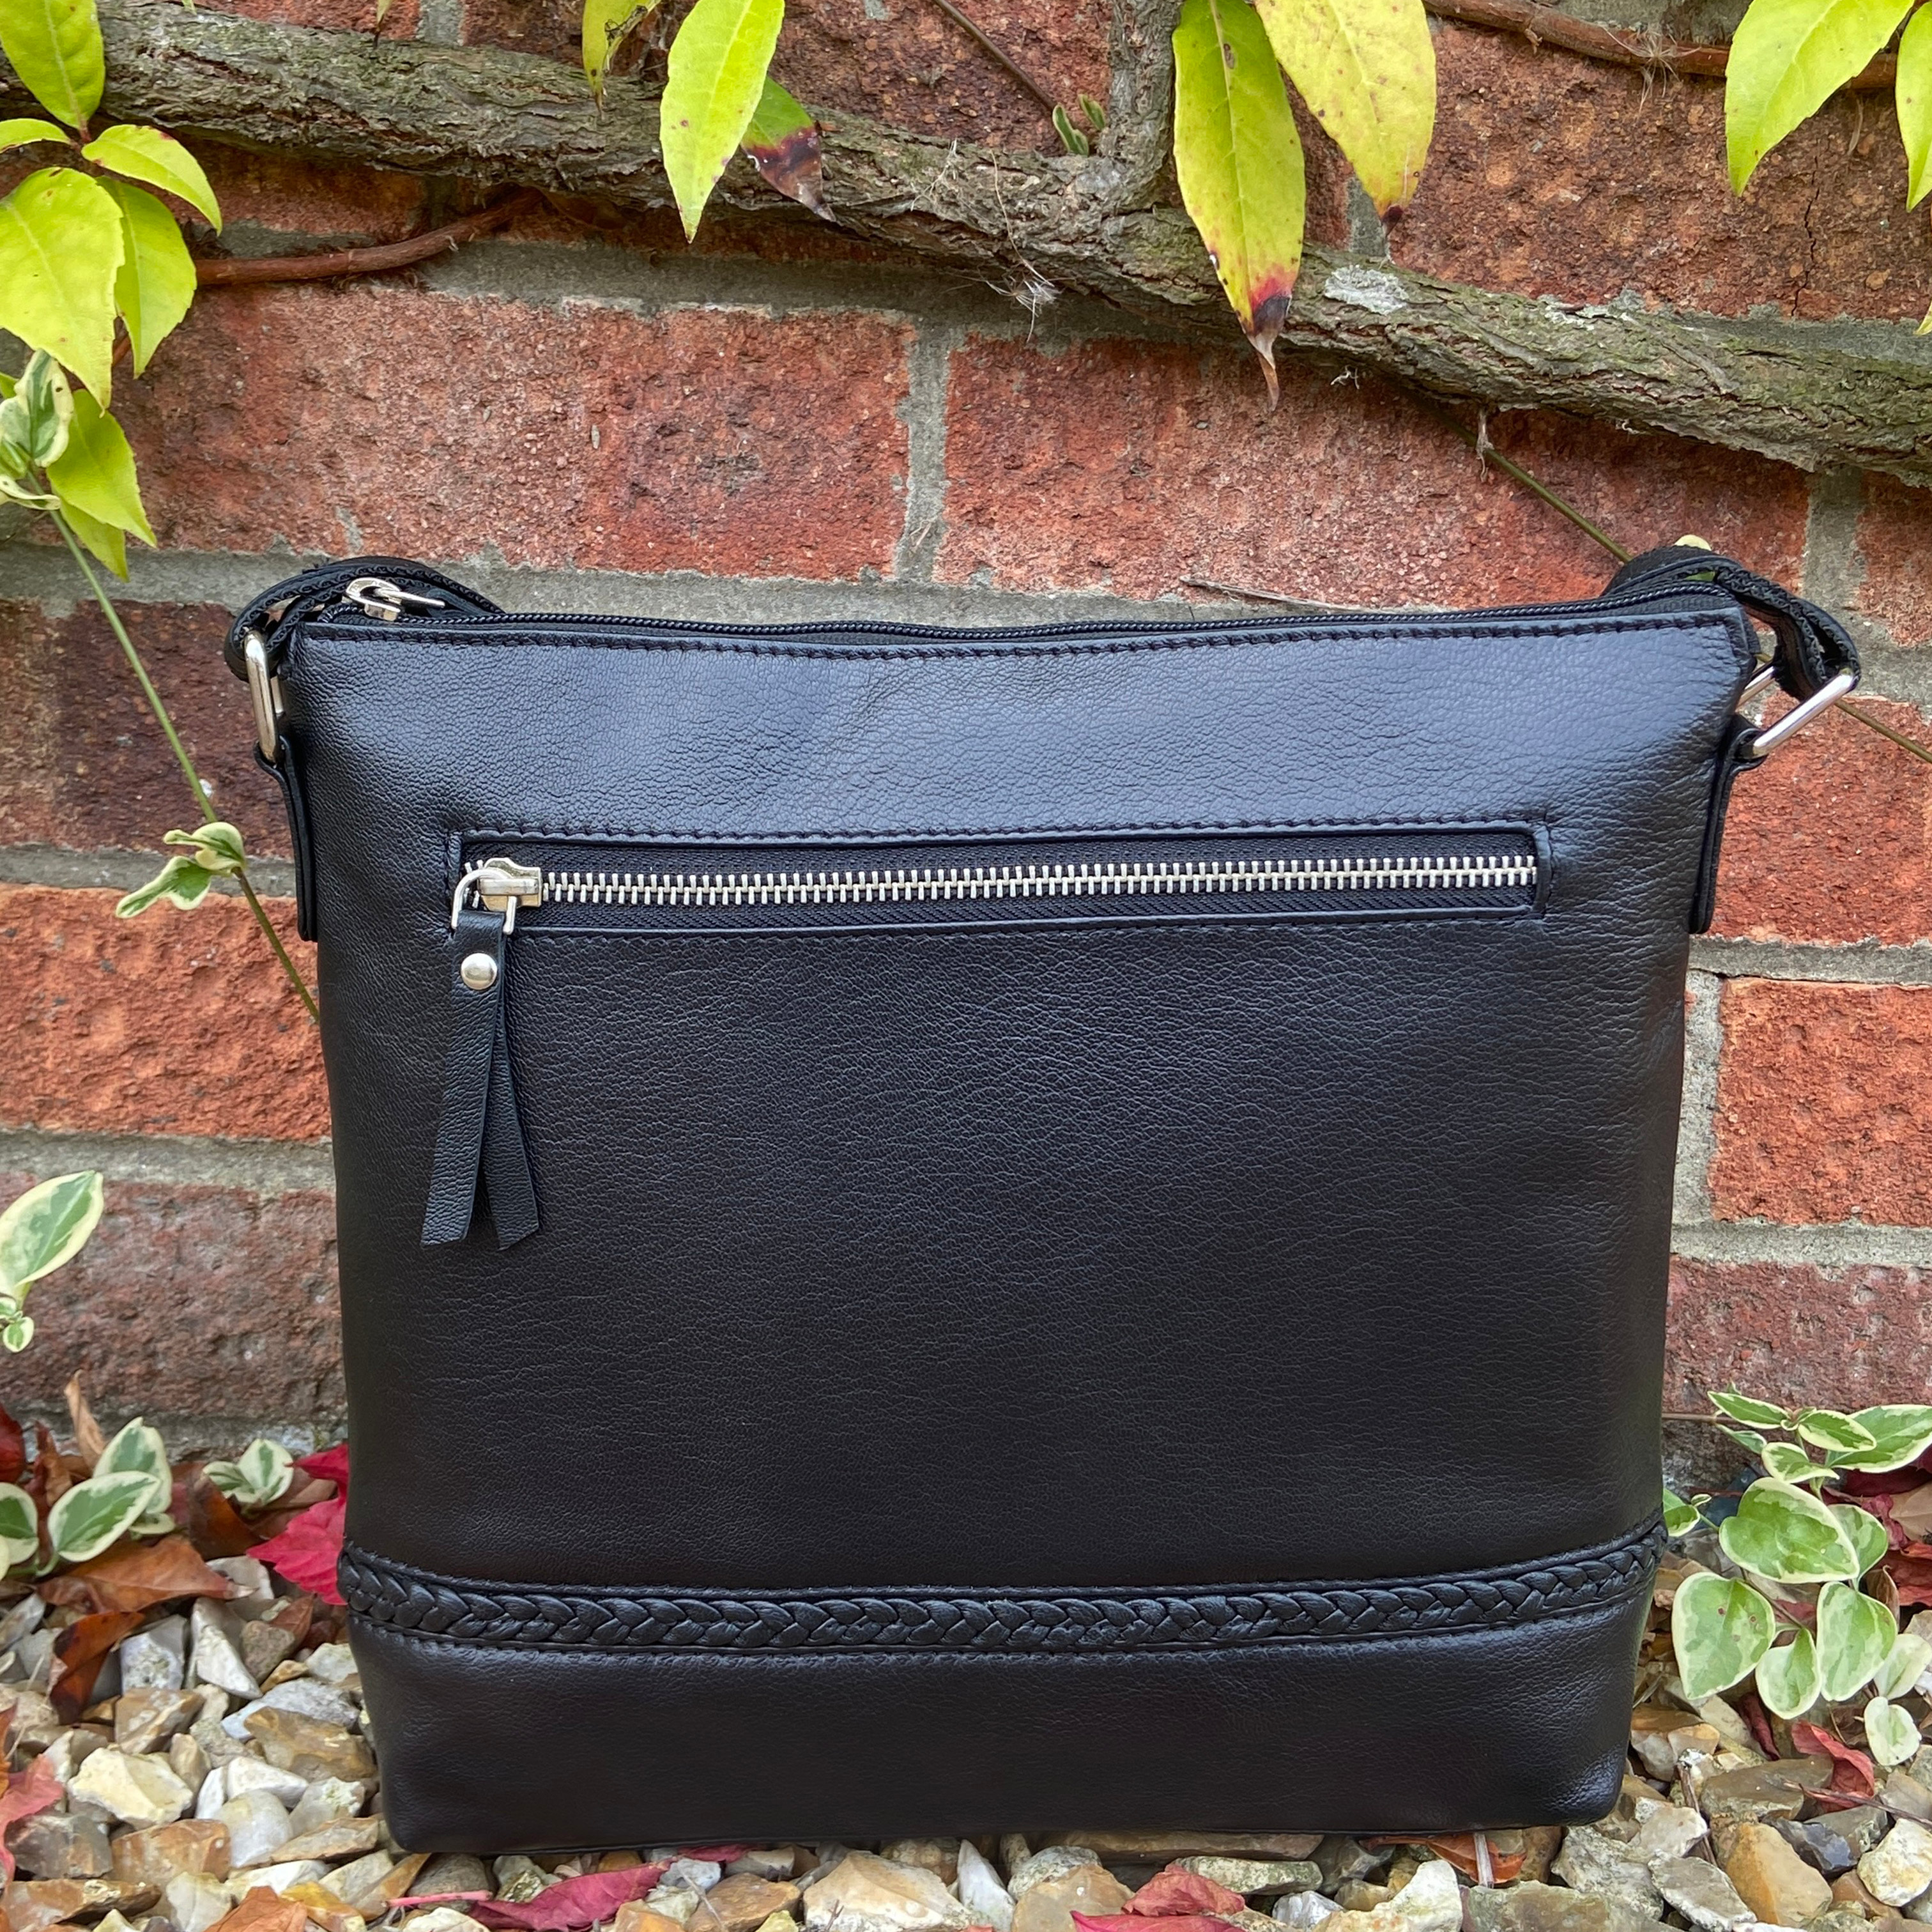 Rowallan Black Leather Tote Bag, Shoulder Bag